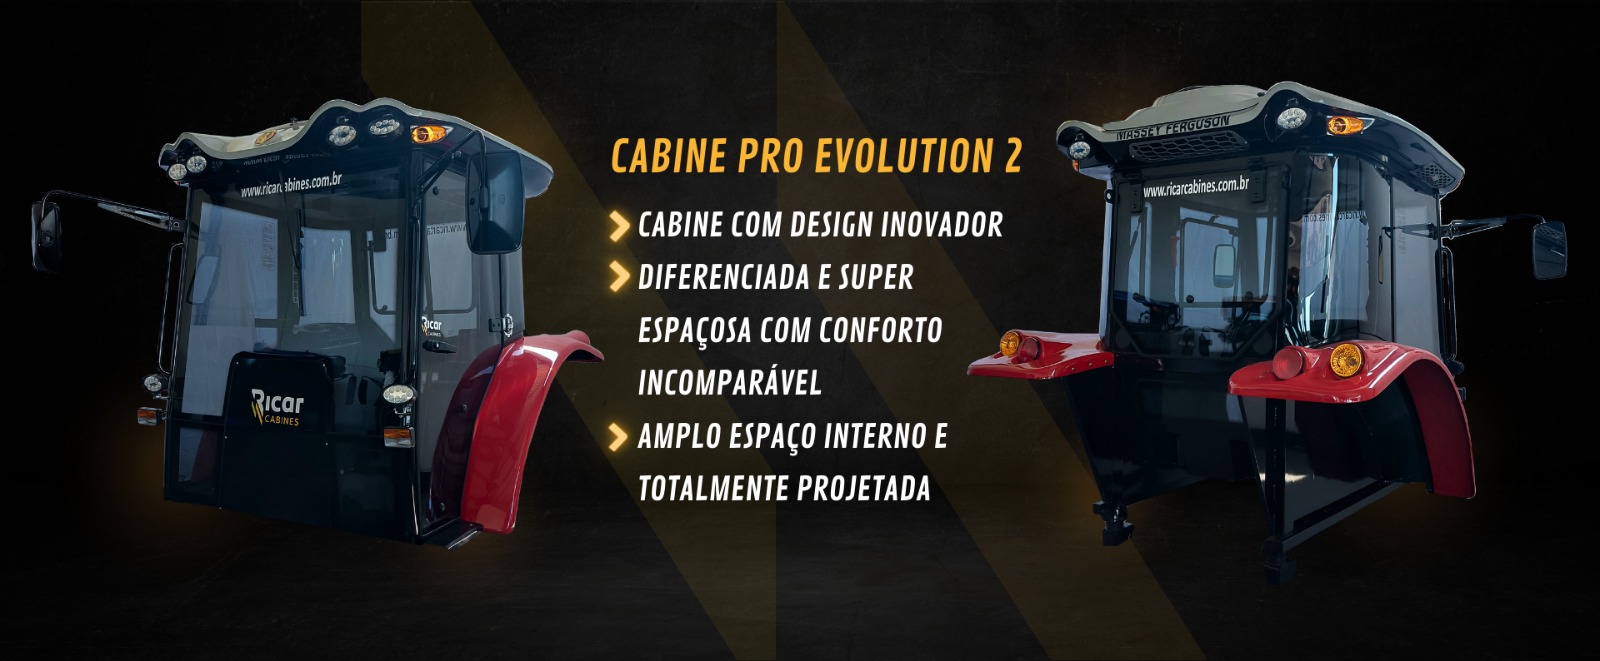 cabine pro evolution 2